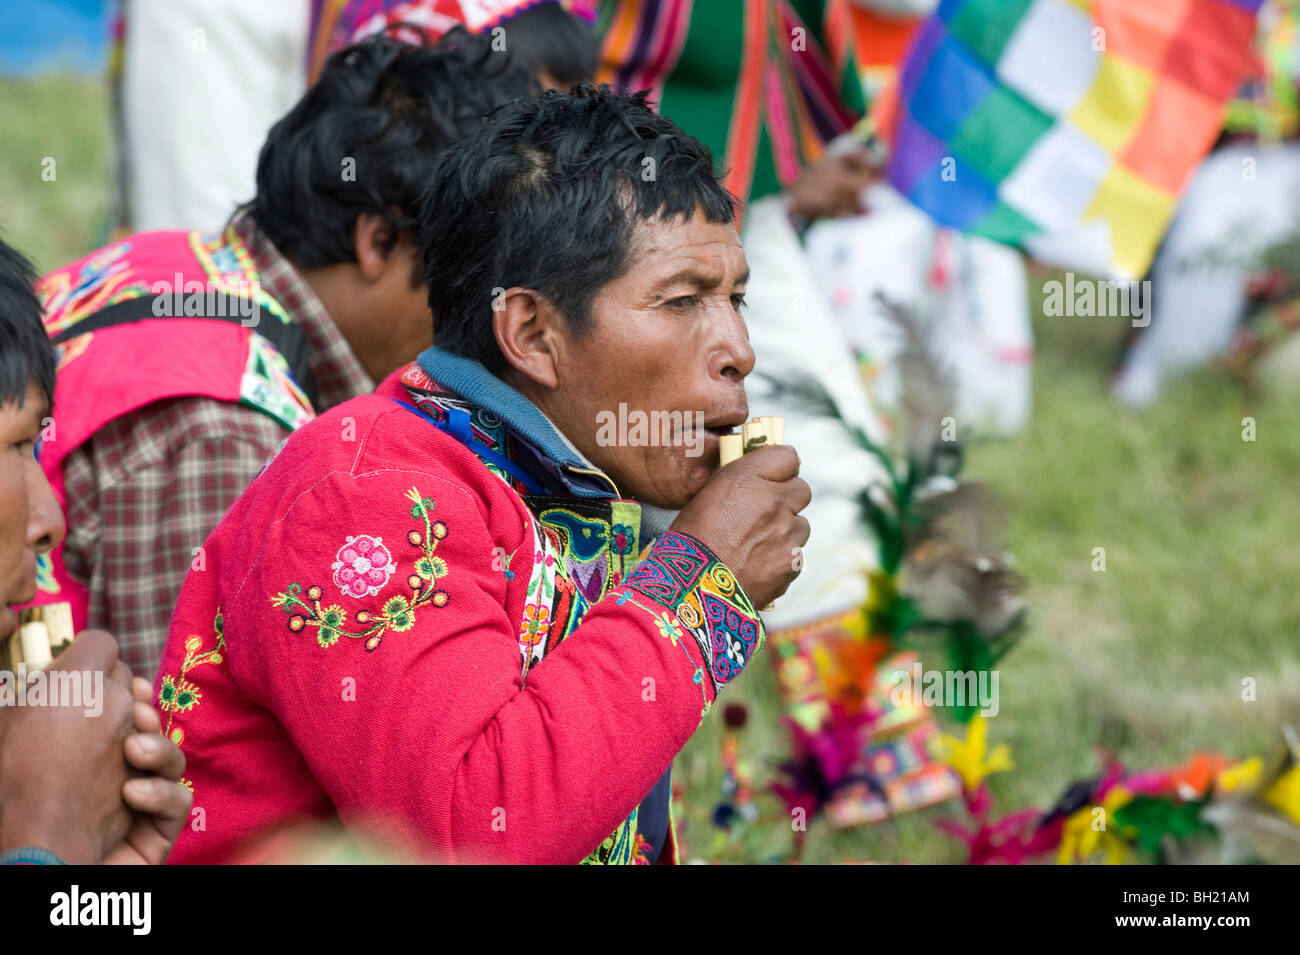 Andean musicians in the altiplano. Portrait. Stock Photo